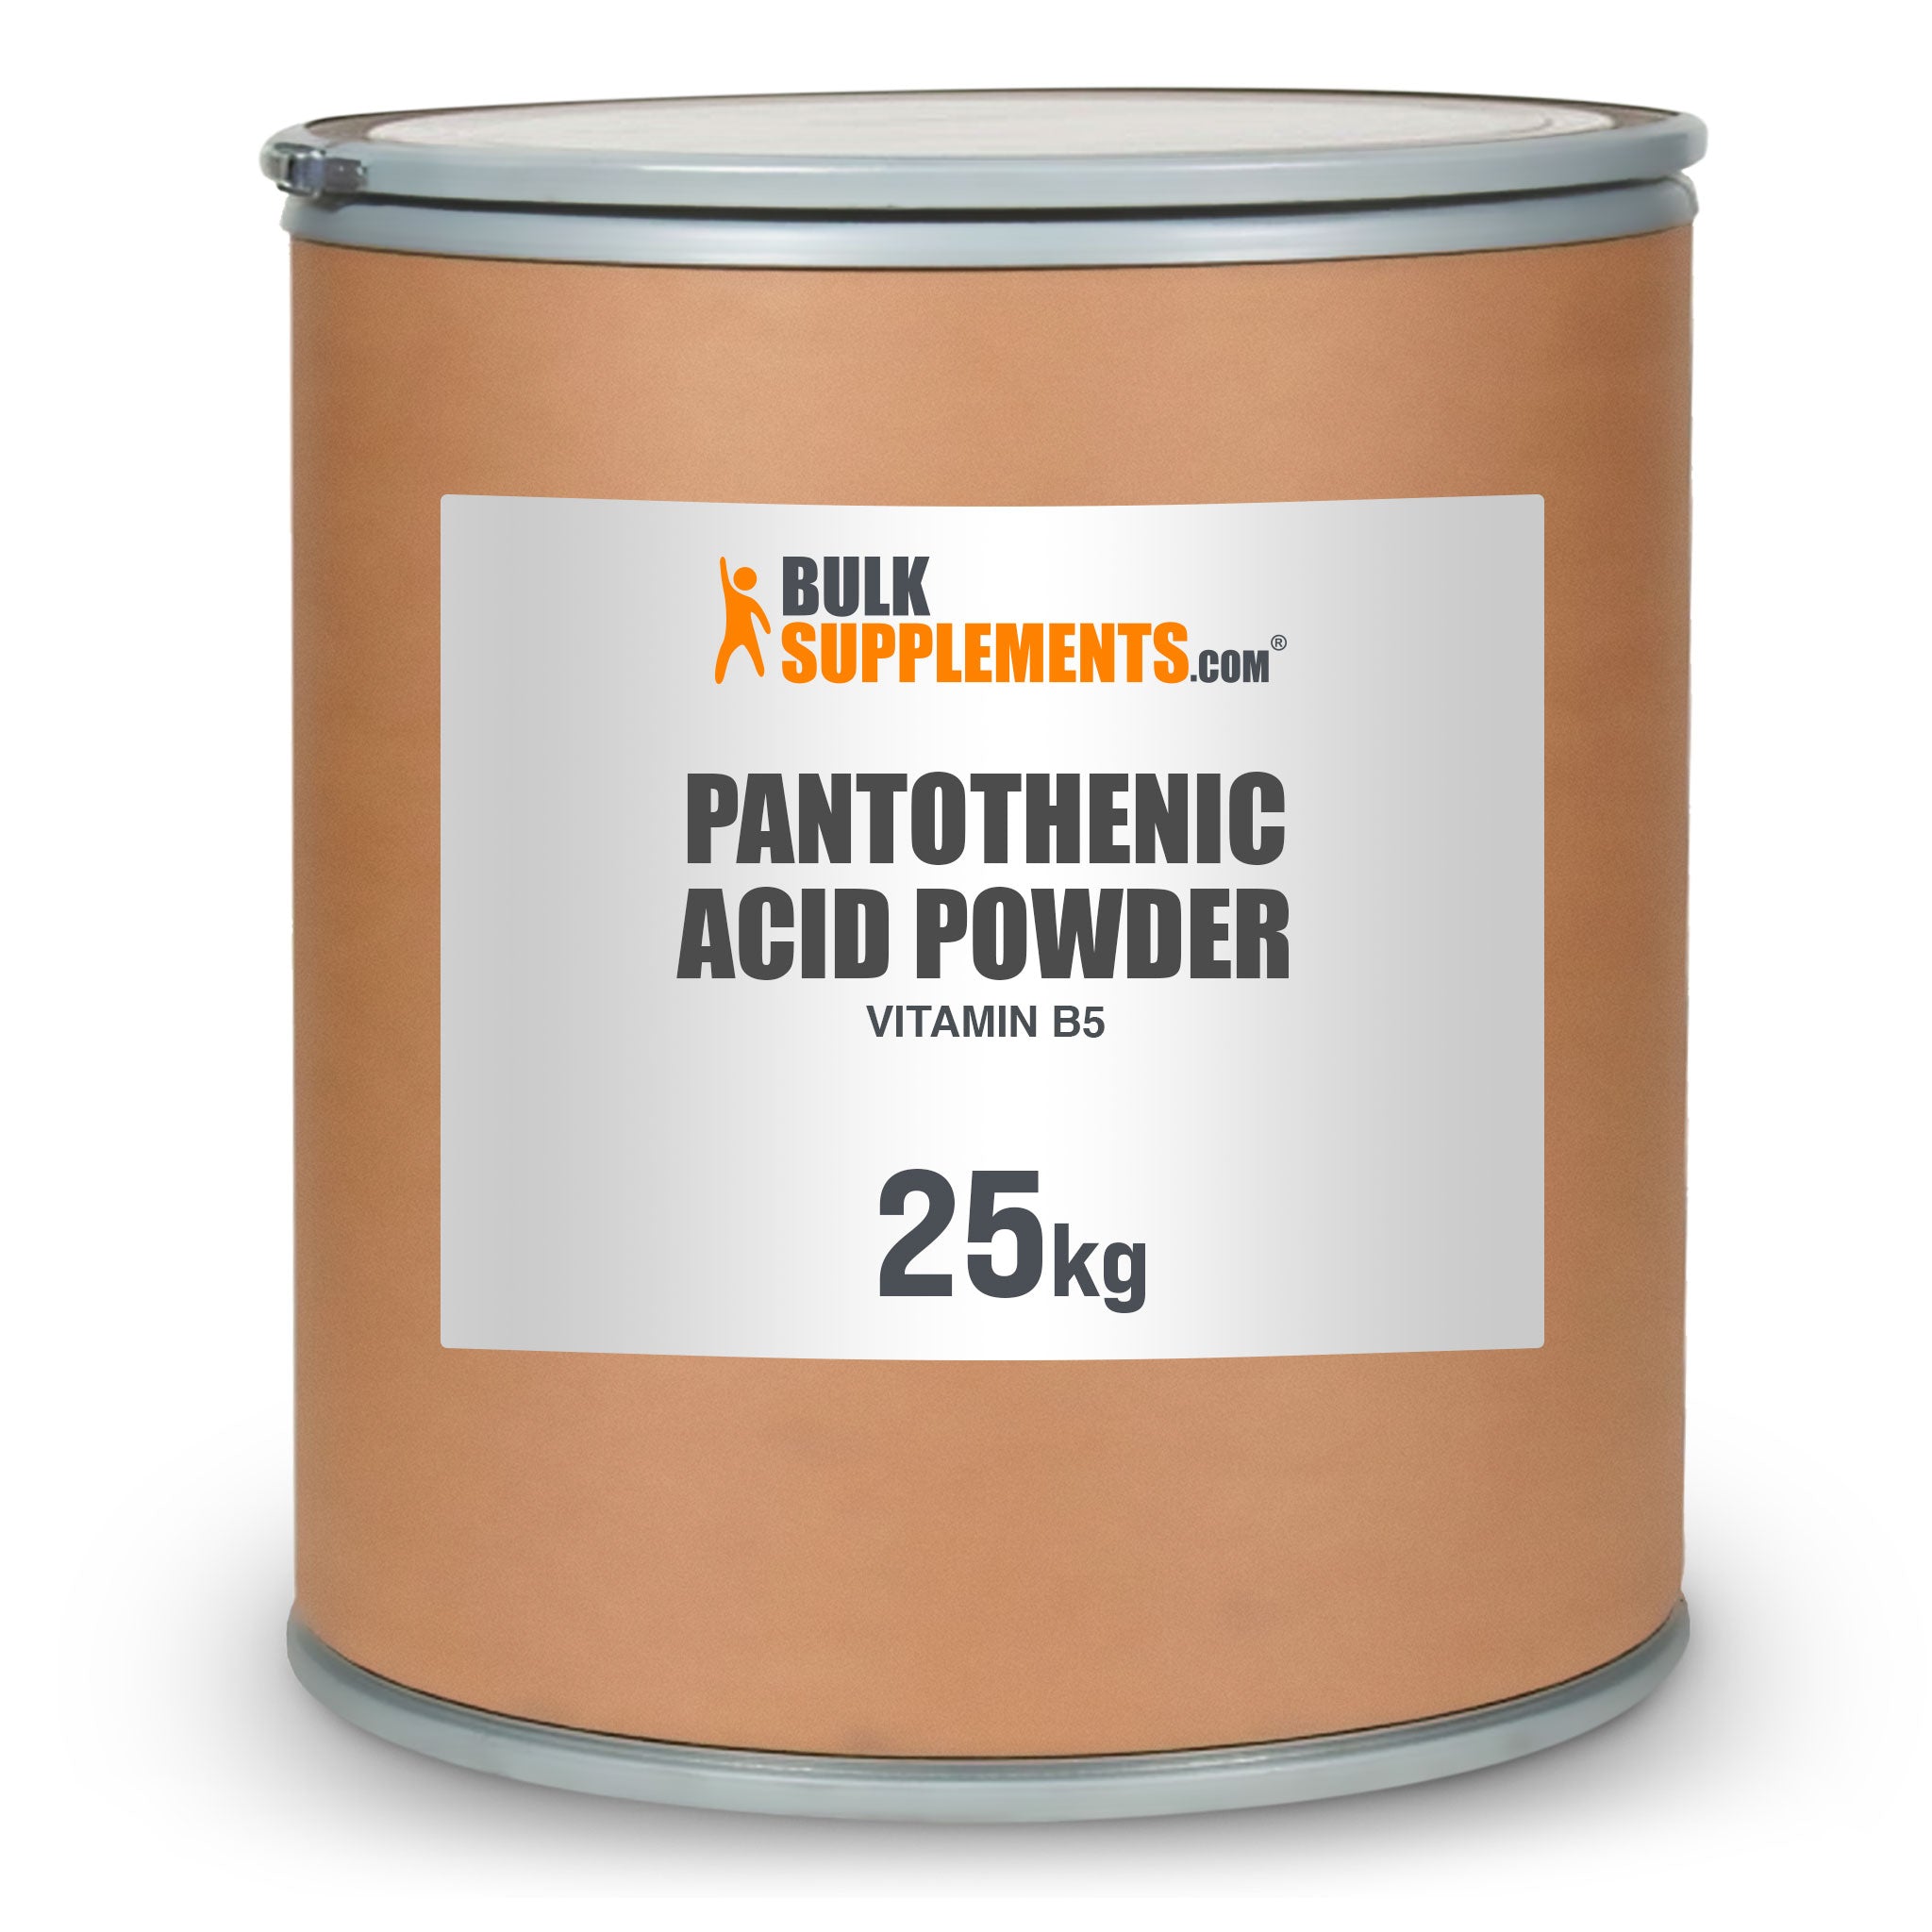 BulkSupplements Pantothenic Acid Powder Vitamin B5 25kg drum